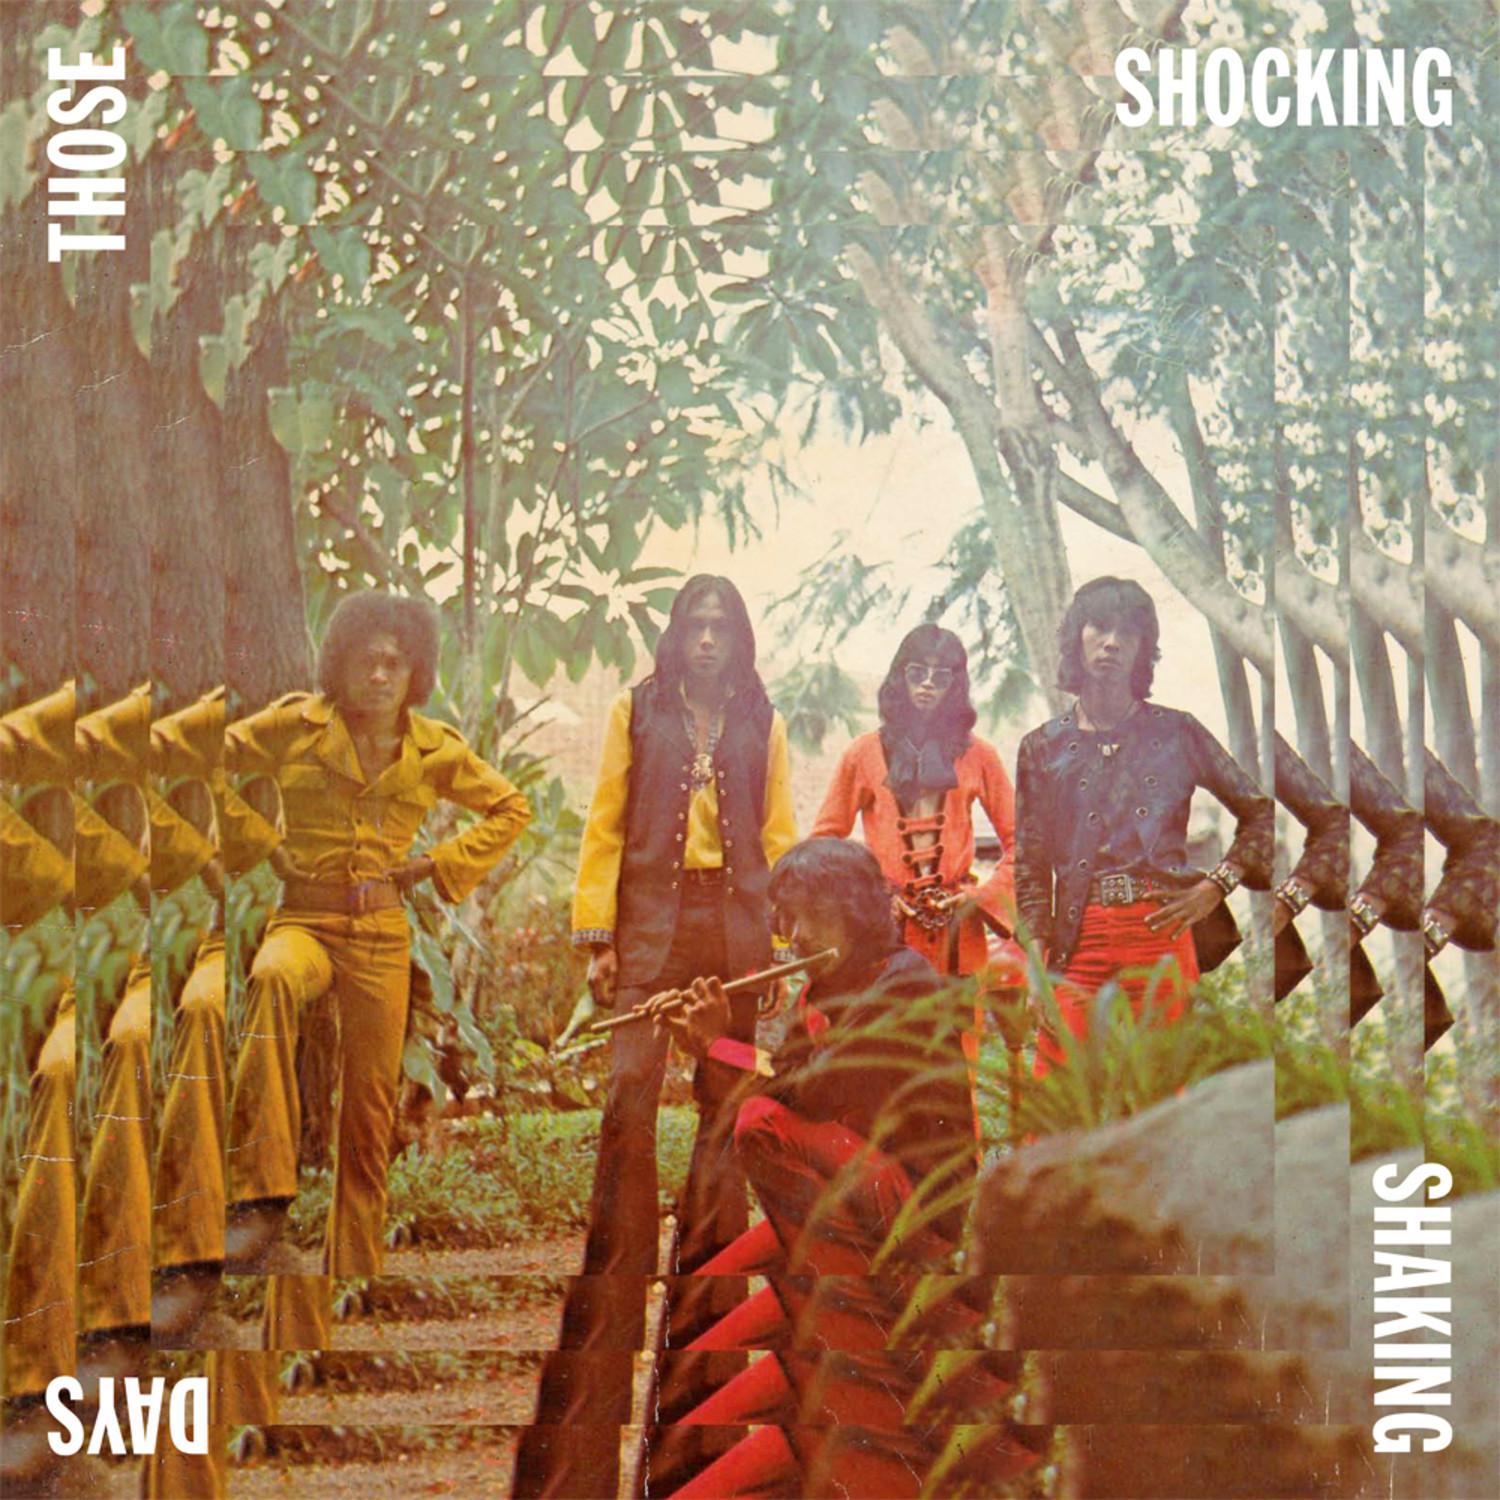 Those Shocking Shaking Days: Indonesia Hard, Psychedelic, Progressive Rock and Funk 1970-1978